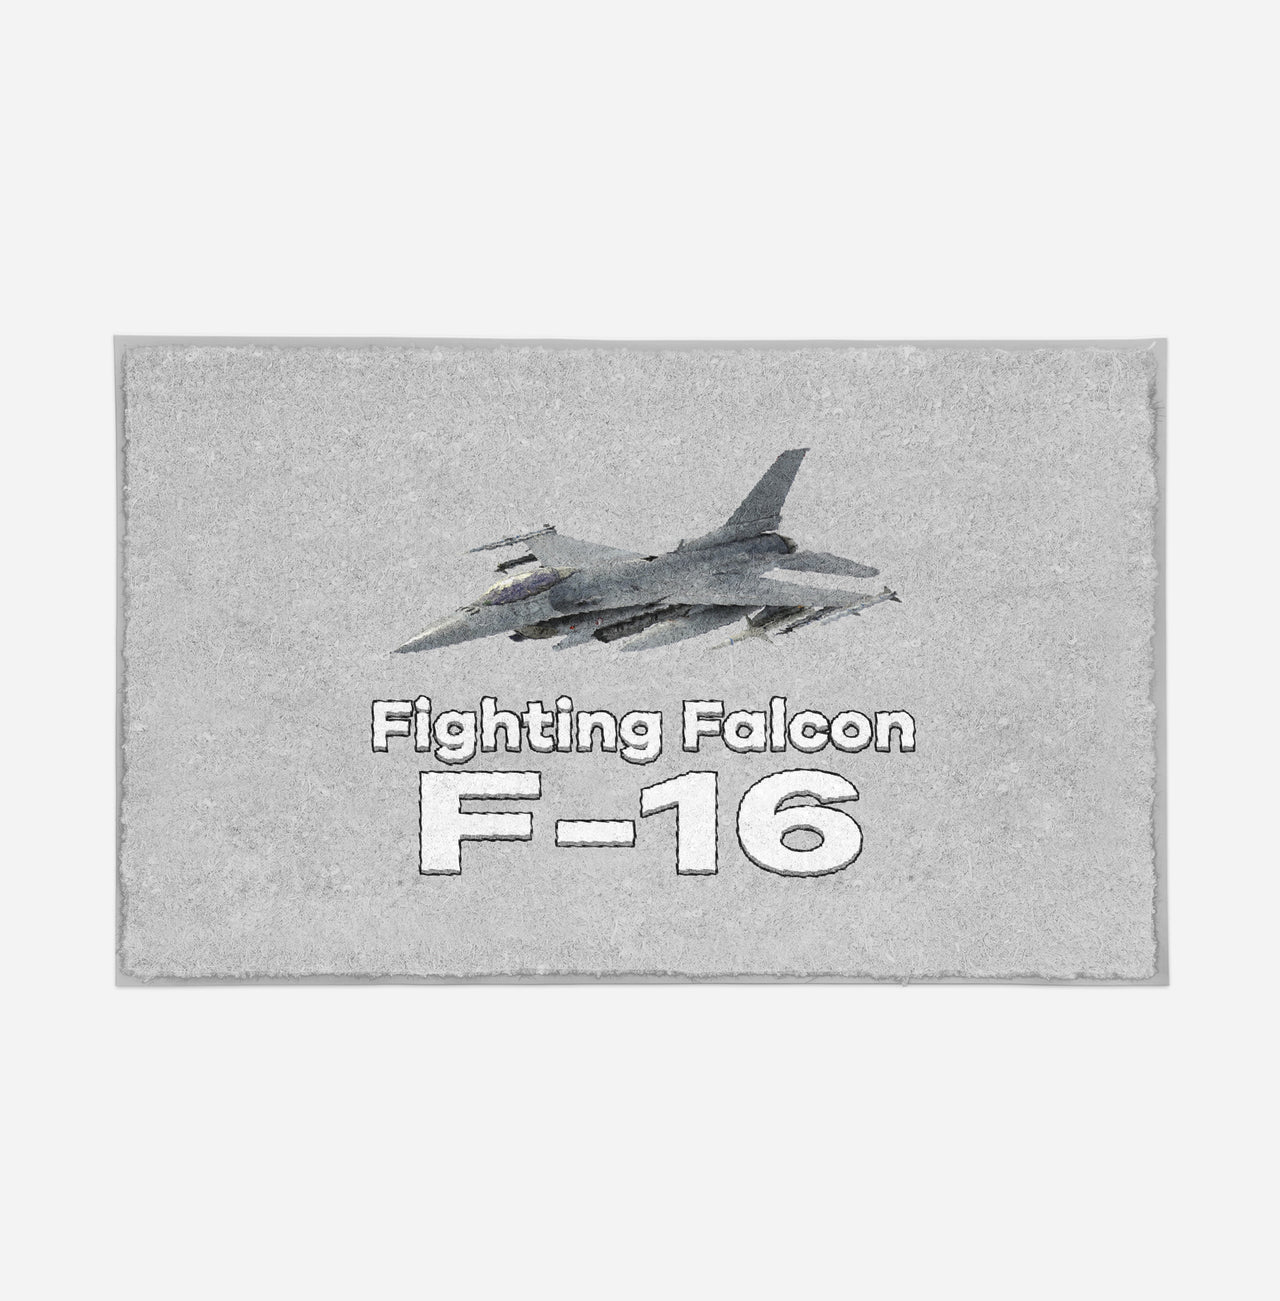 The Fighting Falcon F16 Designed Door Mats